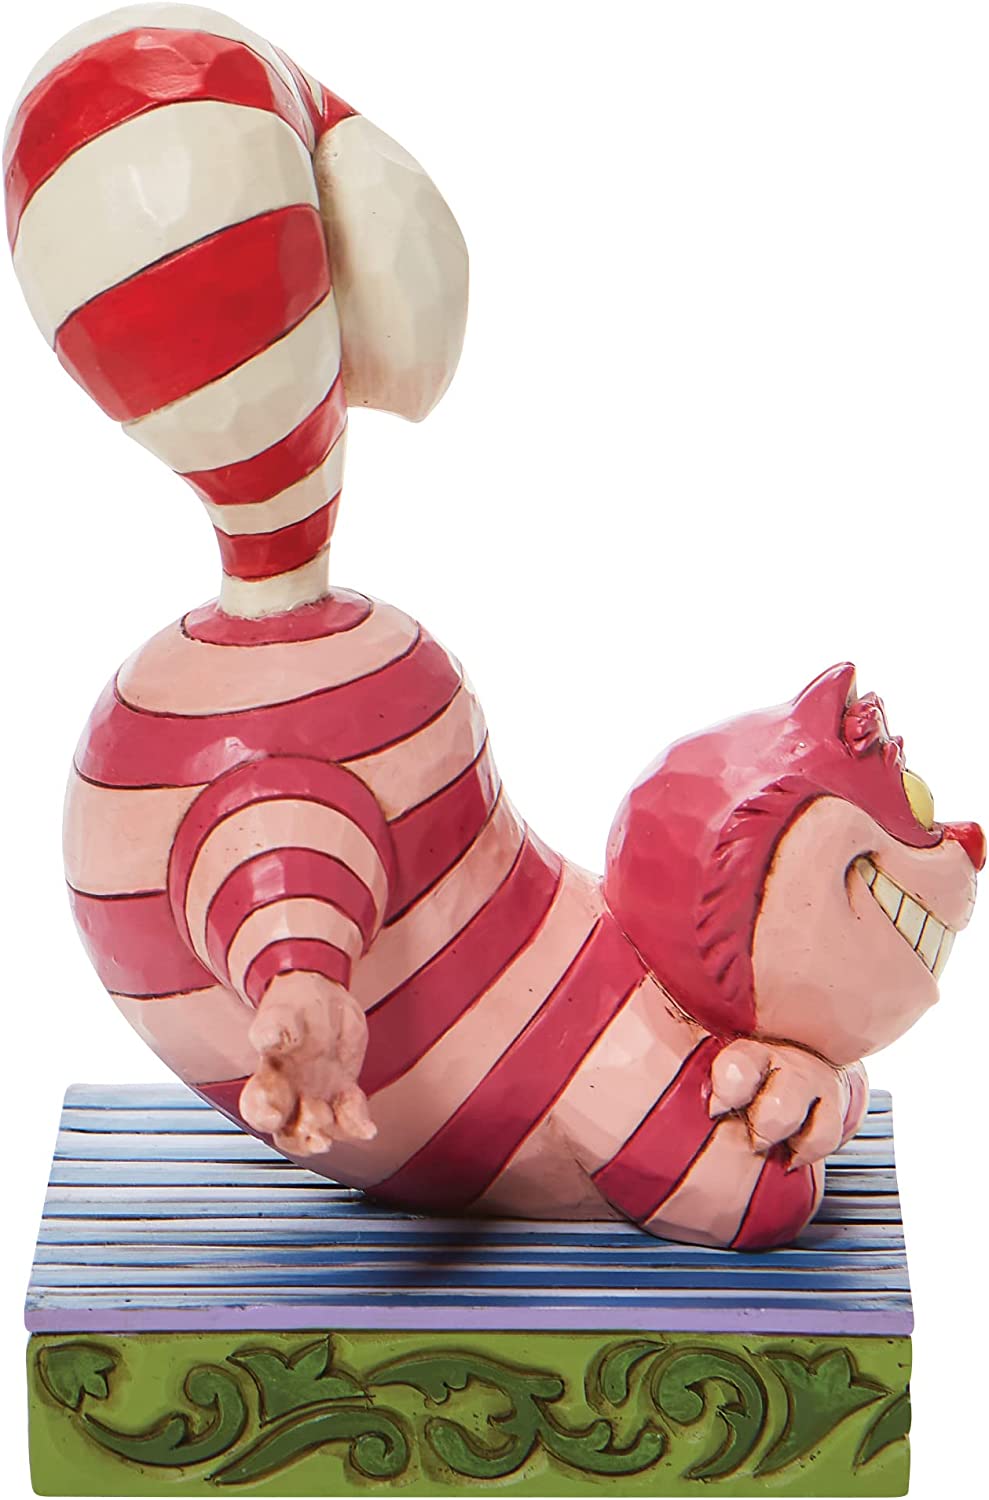 Grinsekatze-Cheshire-Cat-Figur-Disney-by-Jim-Shore-berlindeluxe-katze-pink-seite